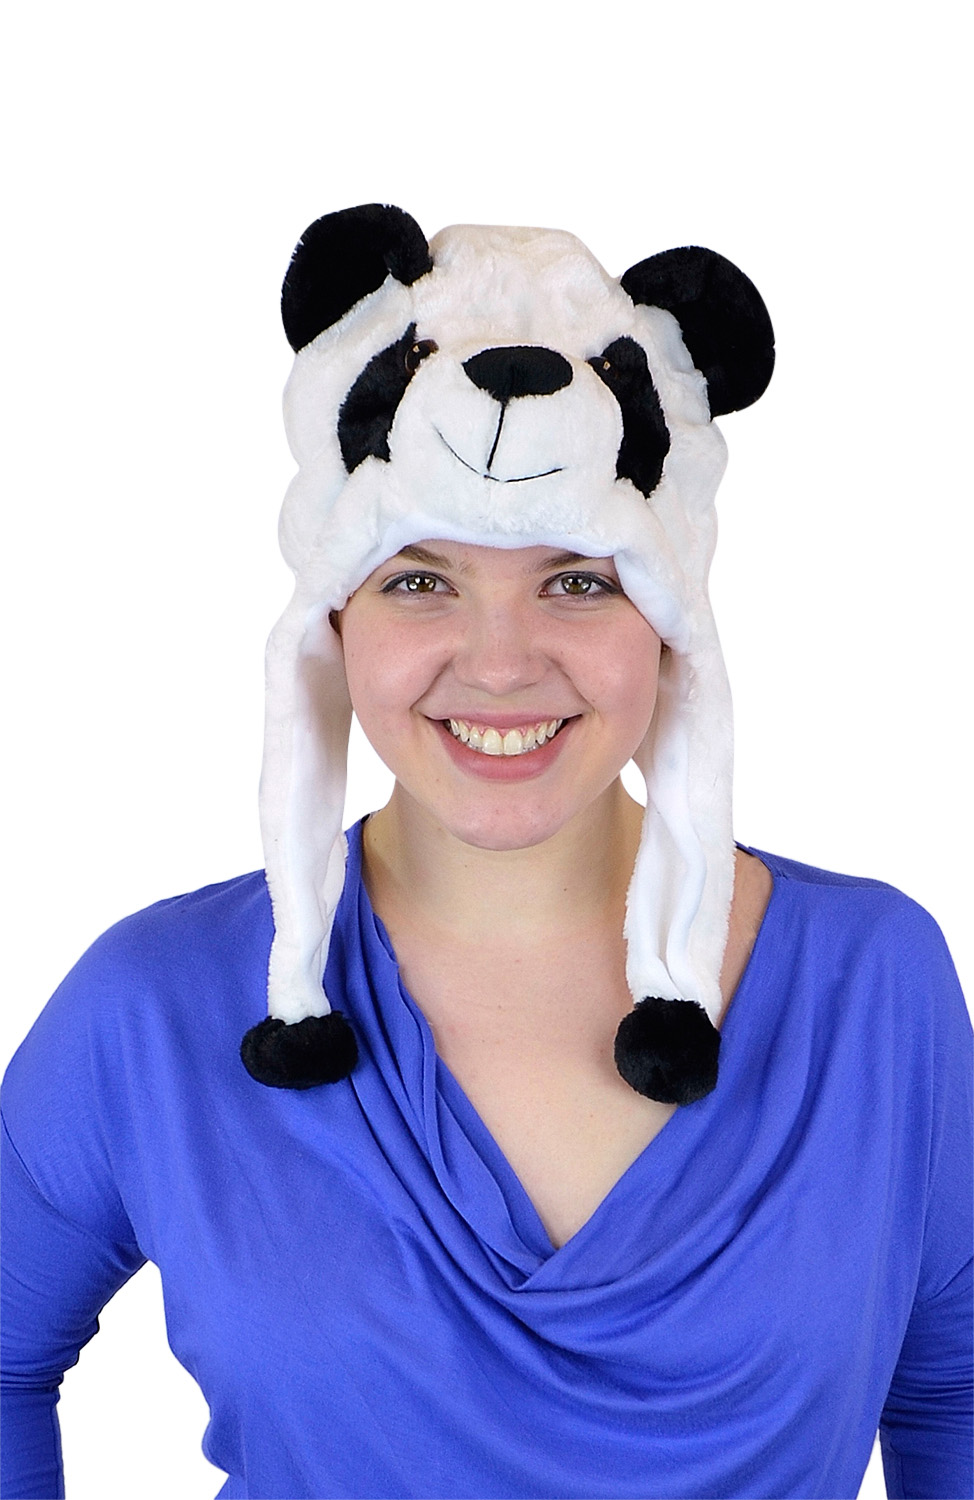 Belle Donne- Unisex Animal Hats Plush Style Pom Pom - Warm Winter Hats - Panda